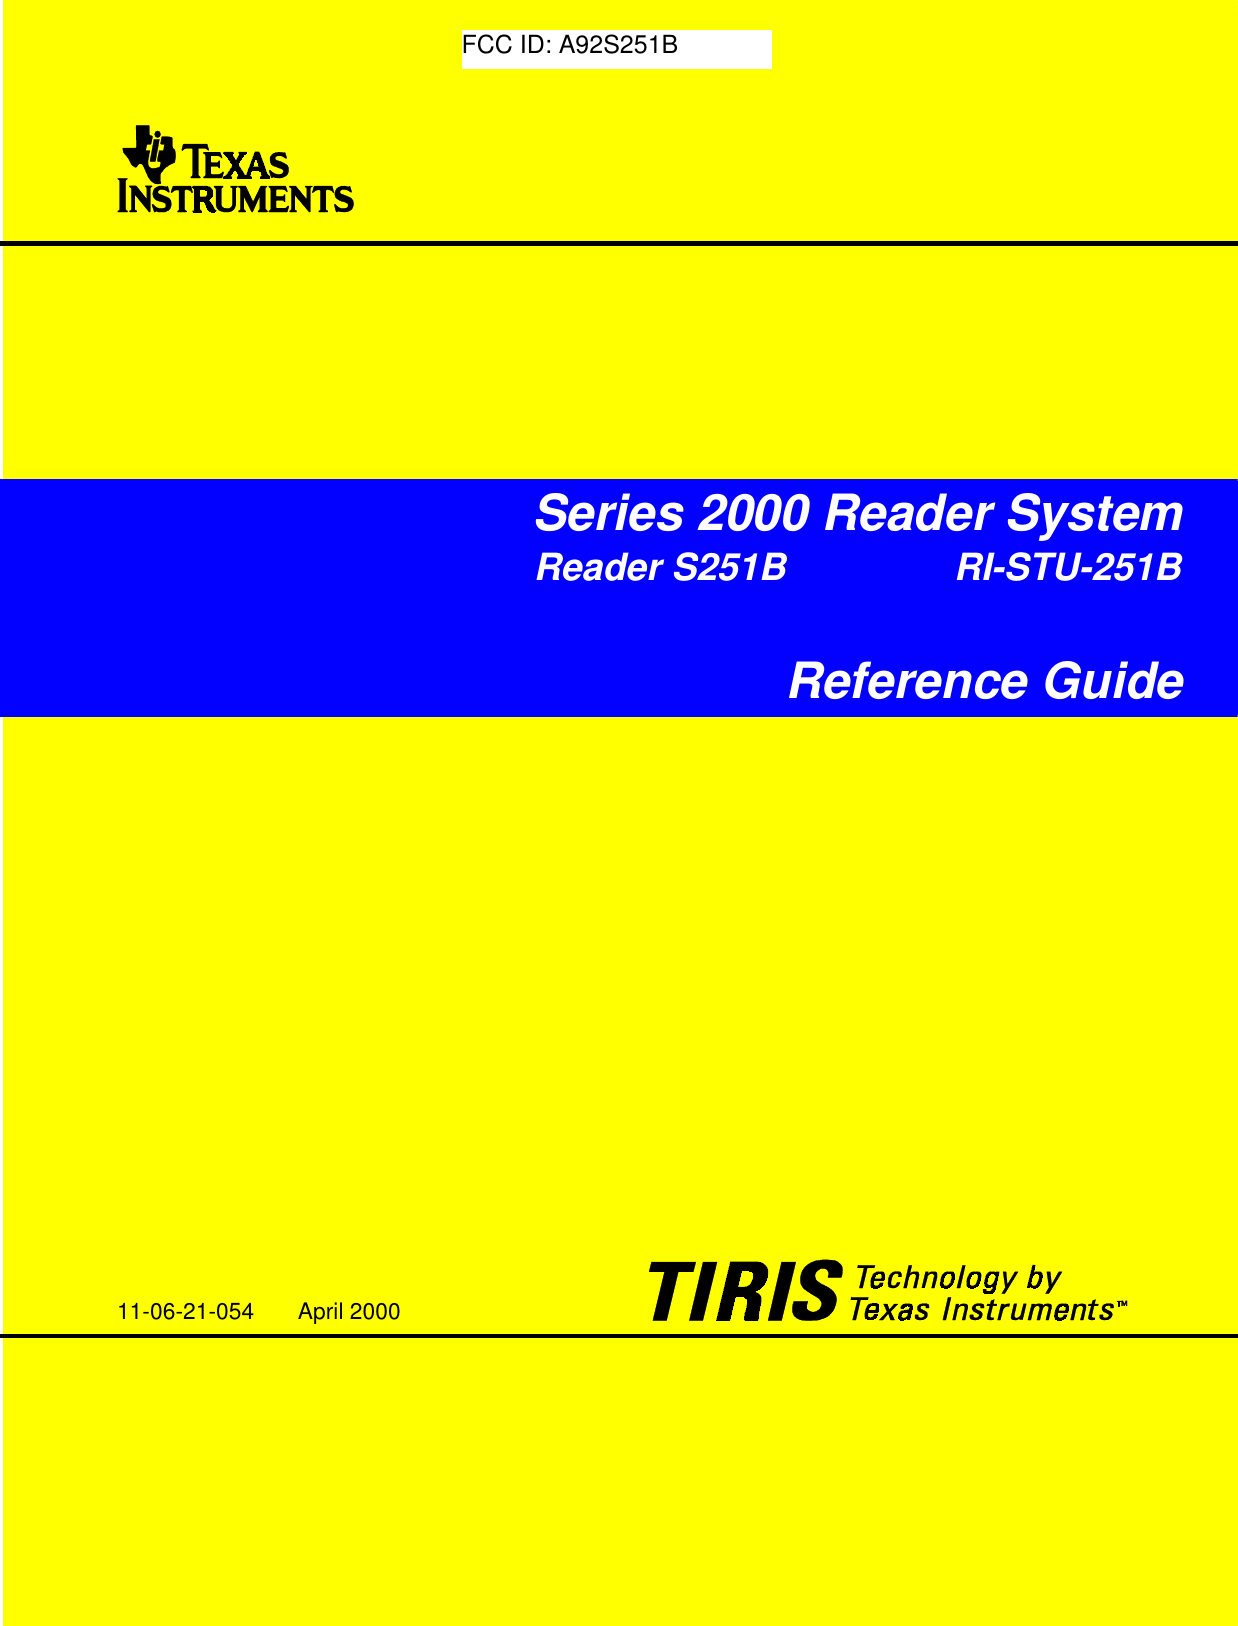 1April ’00 PrefaceSeries 2000 Reader SystemReader S251B   RI-STU-251BReference Guide11-06-21-054 April 2000FCC ID: A92S251B 